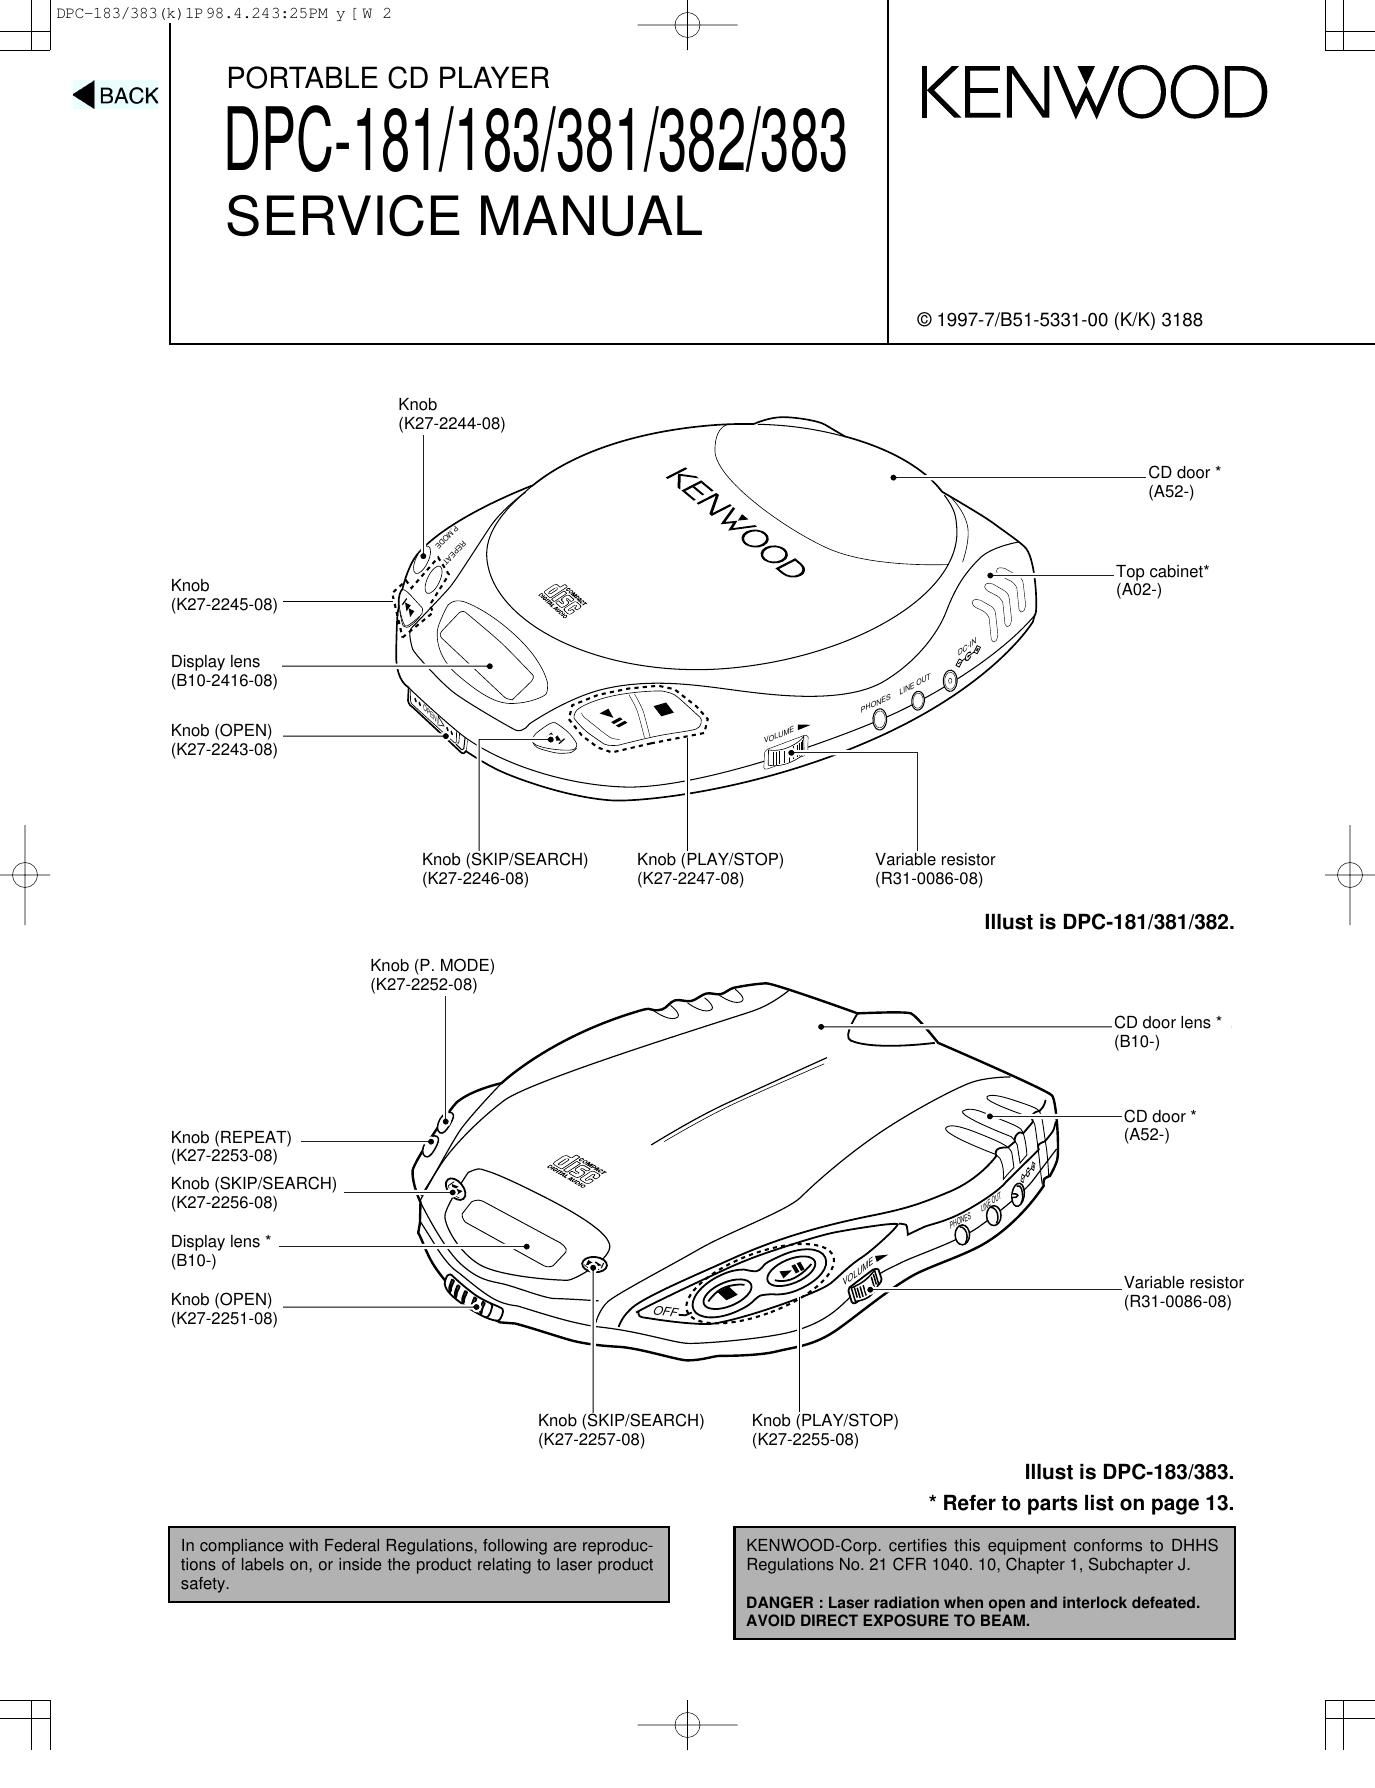 Kenwood DPC 381 Service Manual